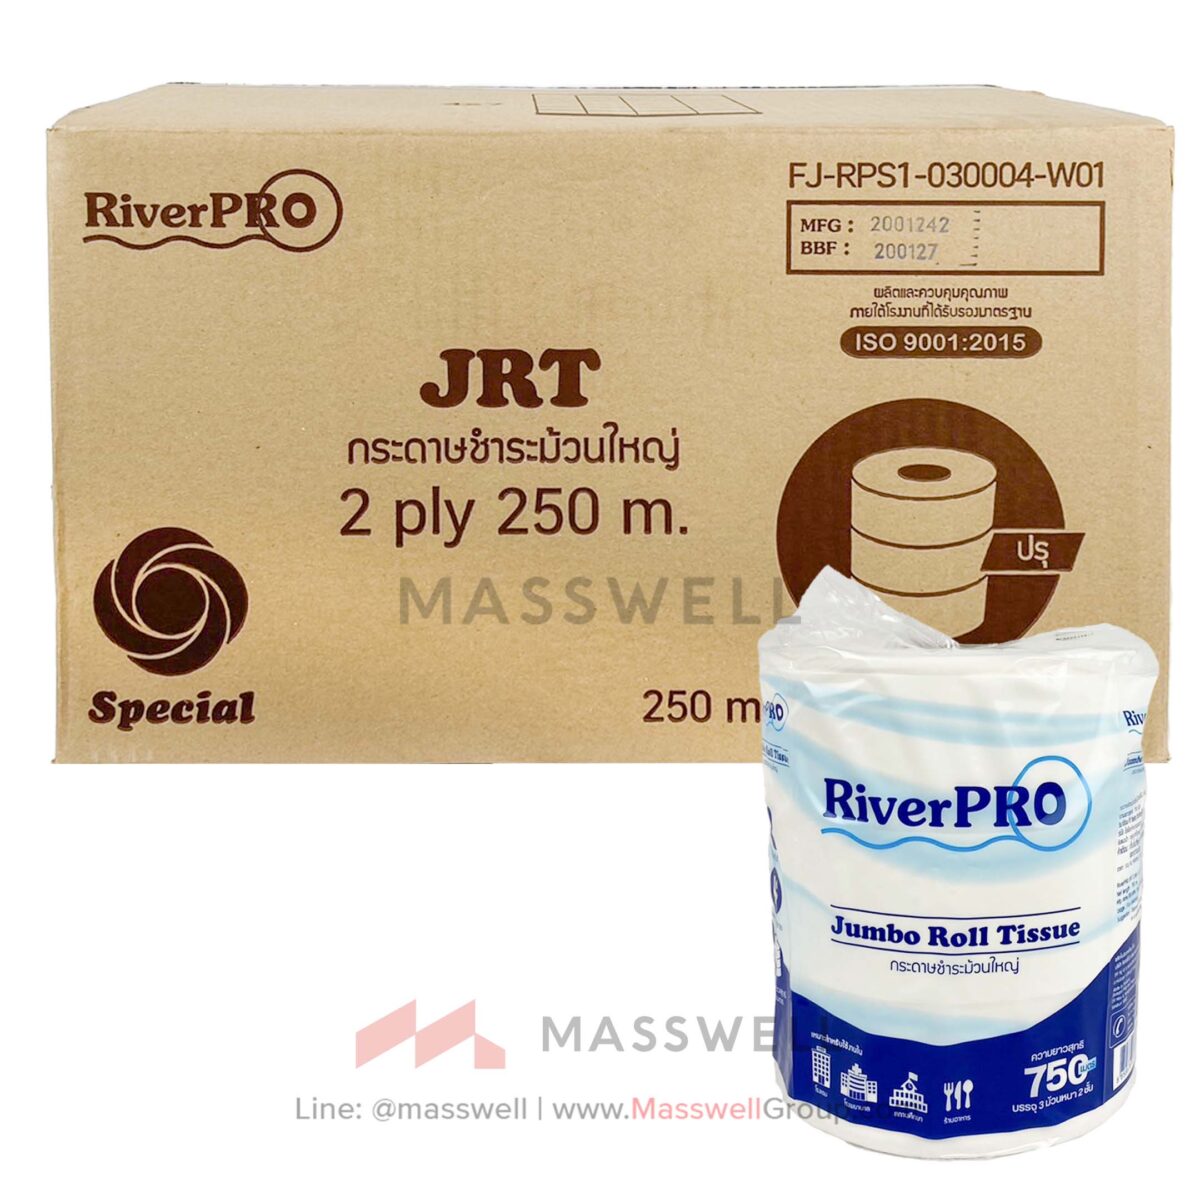 RIVERPRO Special Jumbo Roll Tissue, 2-Ply 250 m. (3 Rolls) x4 Packs